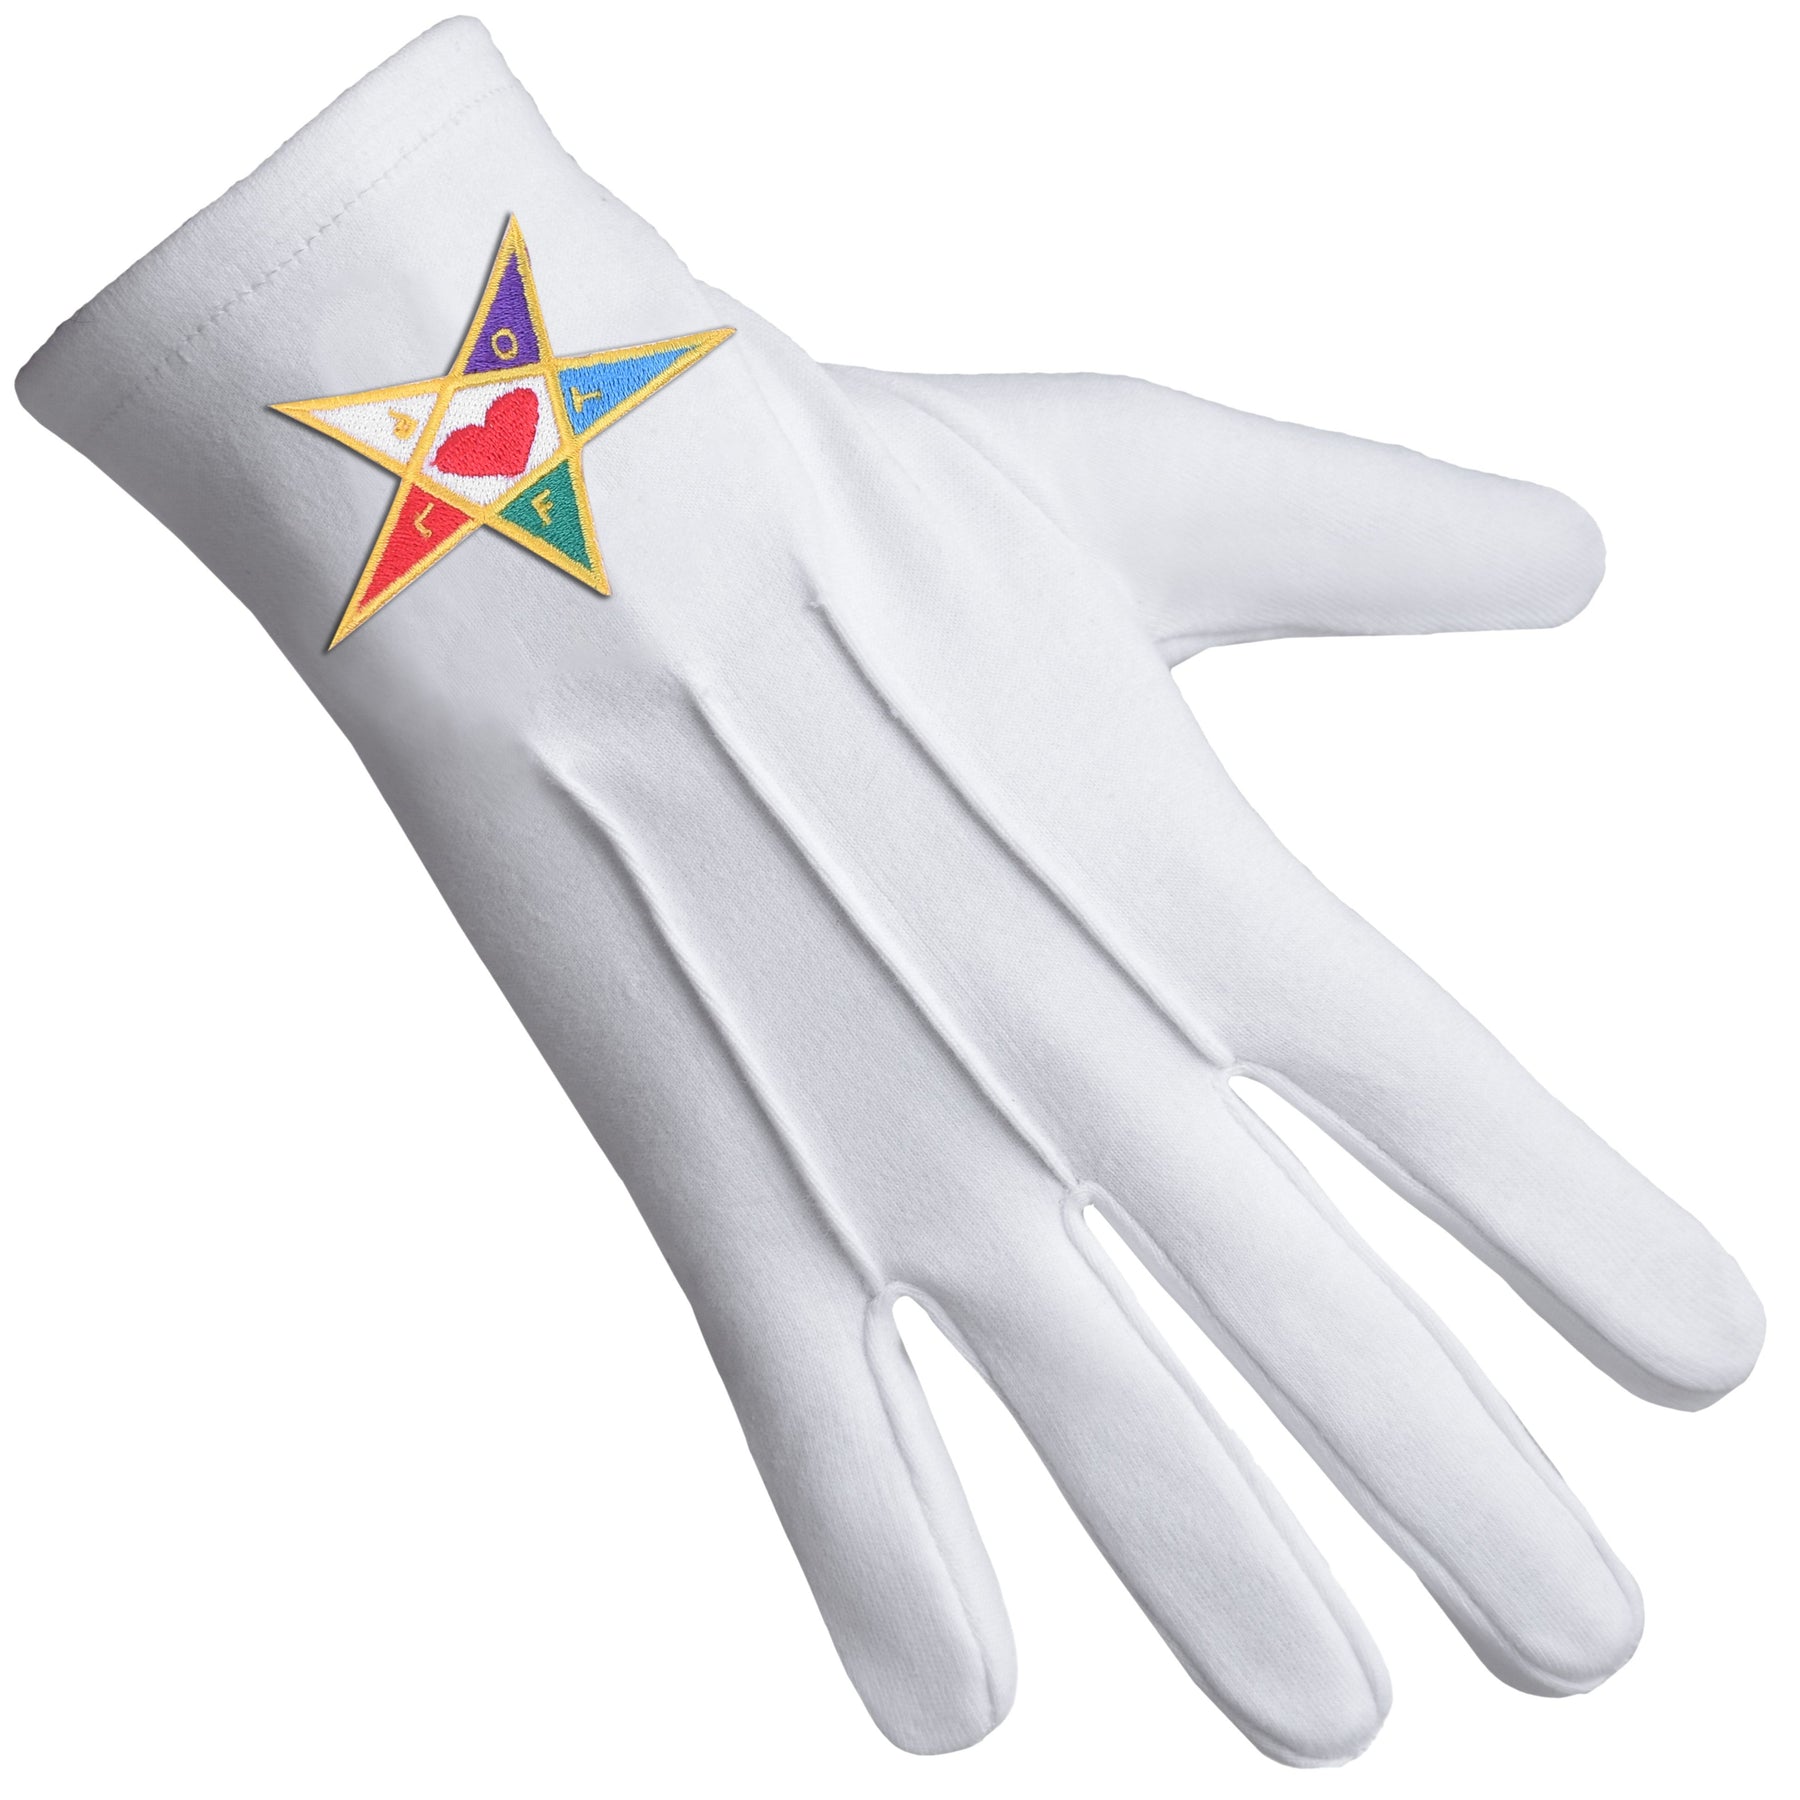 Youth Department International Masons Glove - Cotton With Colorful Star - Bricks Masons